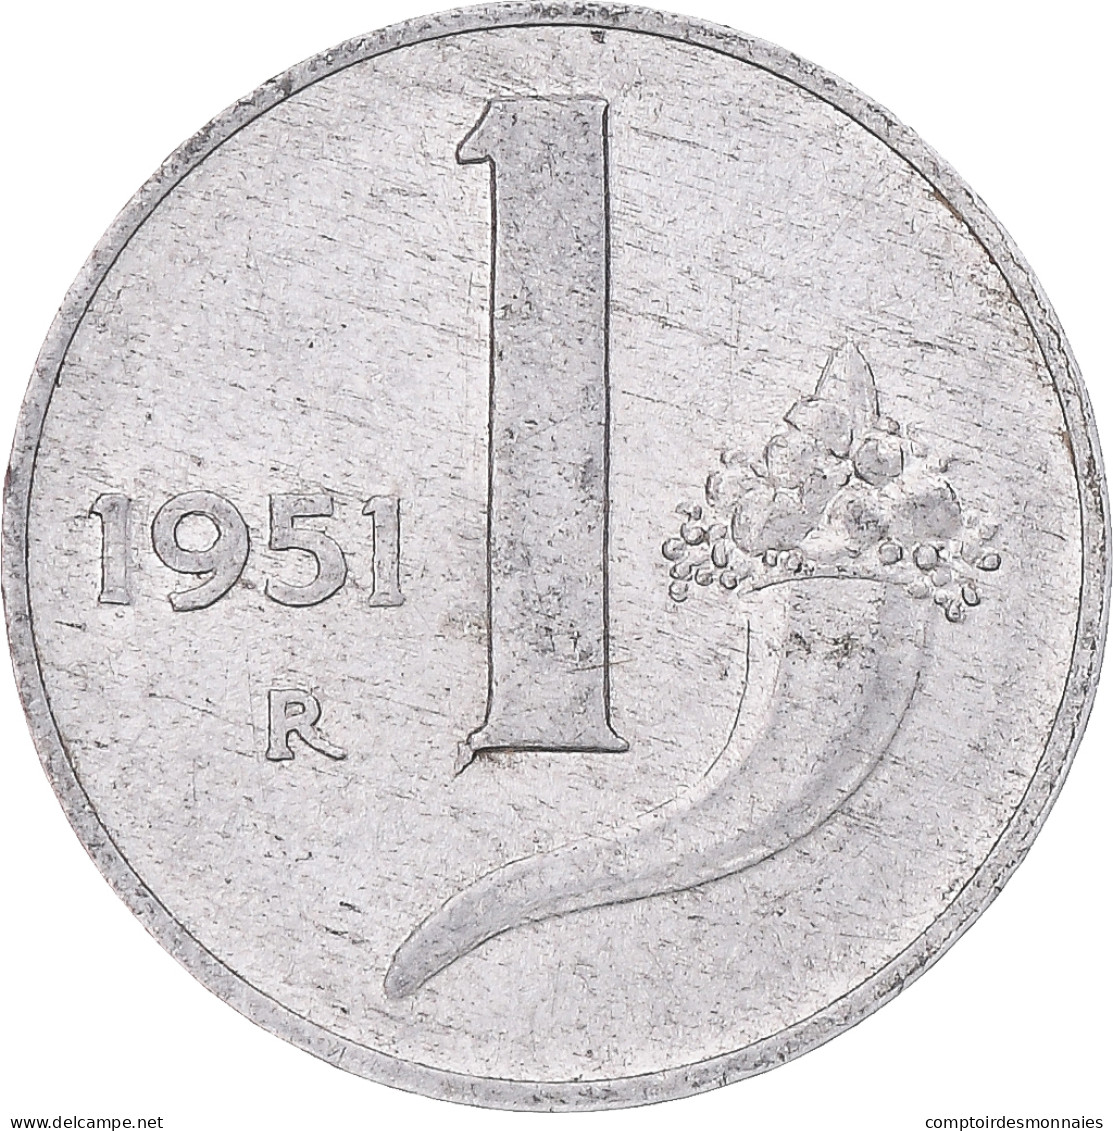 Monnaie, Italie, Lira, 1951, Rome, TB+, Aluminium, KM:91 - 1 Lire